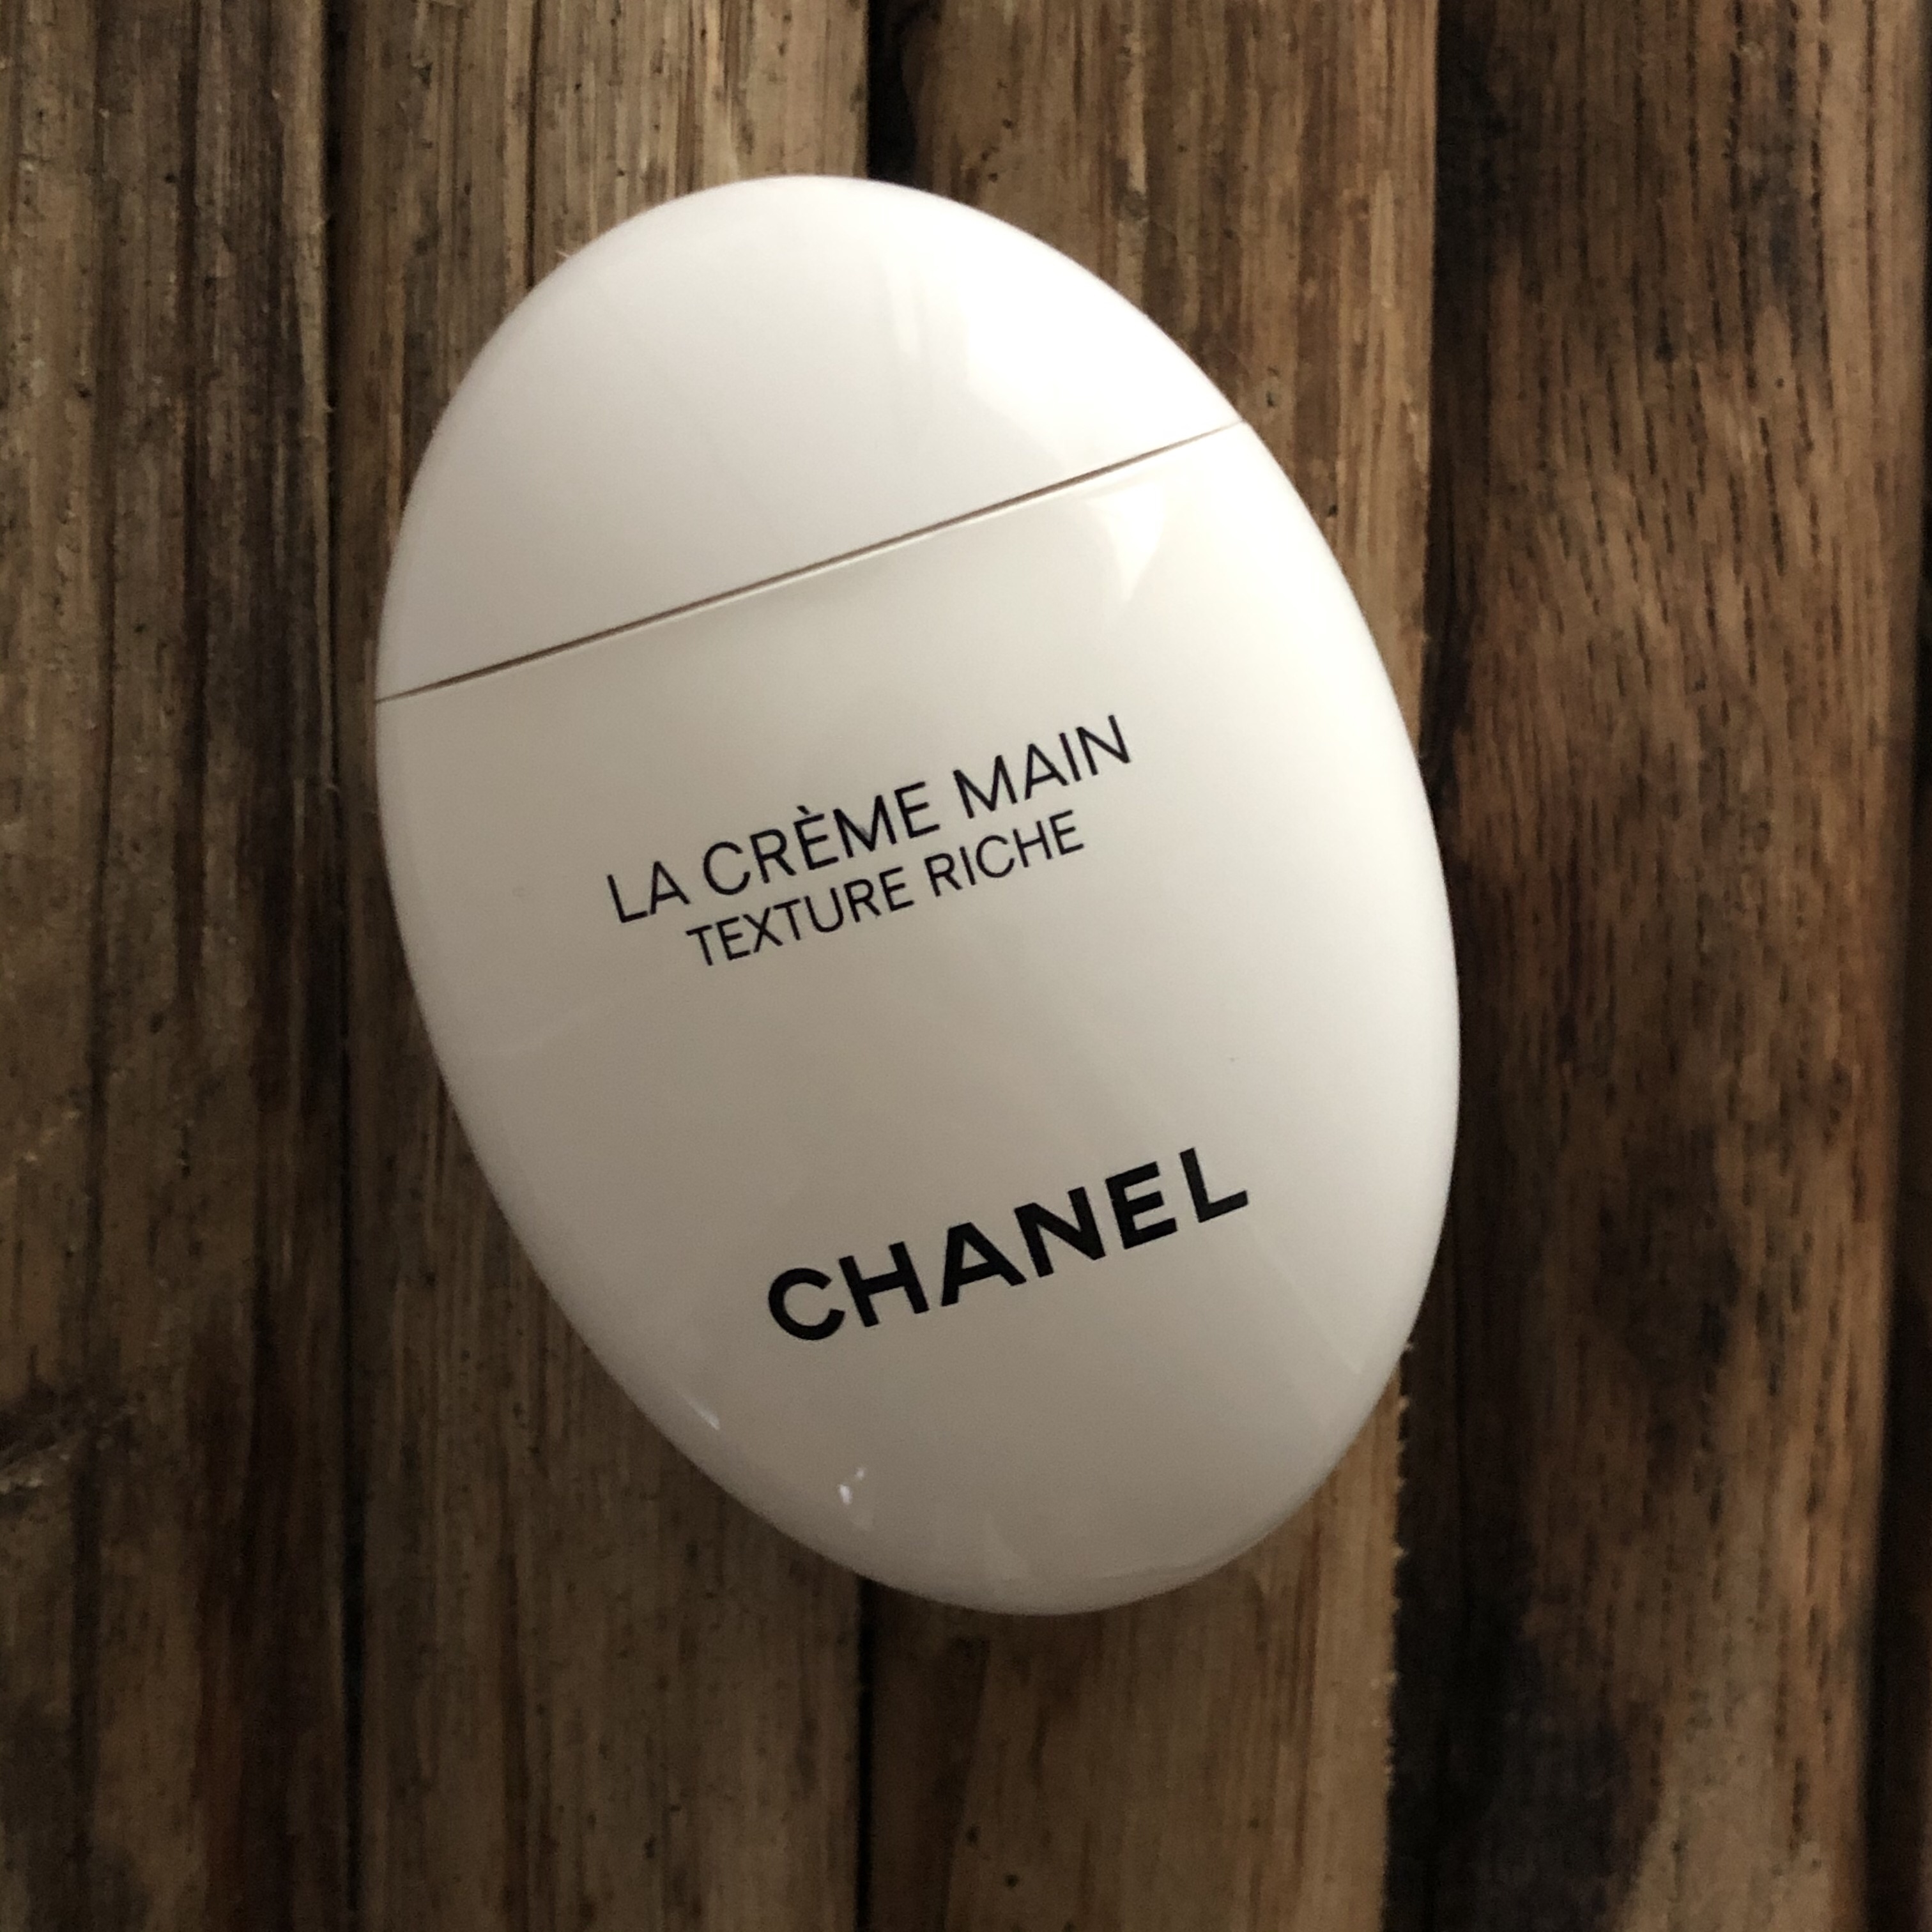 Chanel La Creme Main Hand Cream Texture Riche, 50 Ml: Buy Online at Best  Price in UAE 